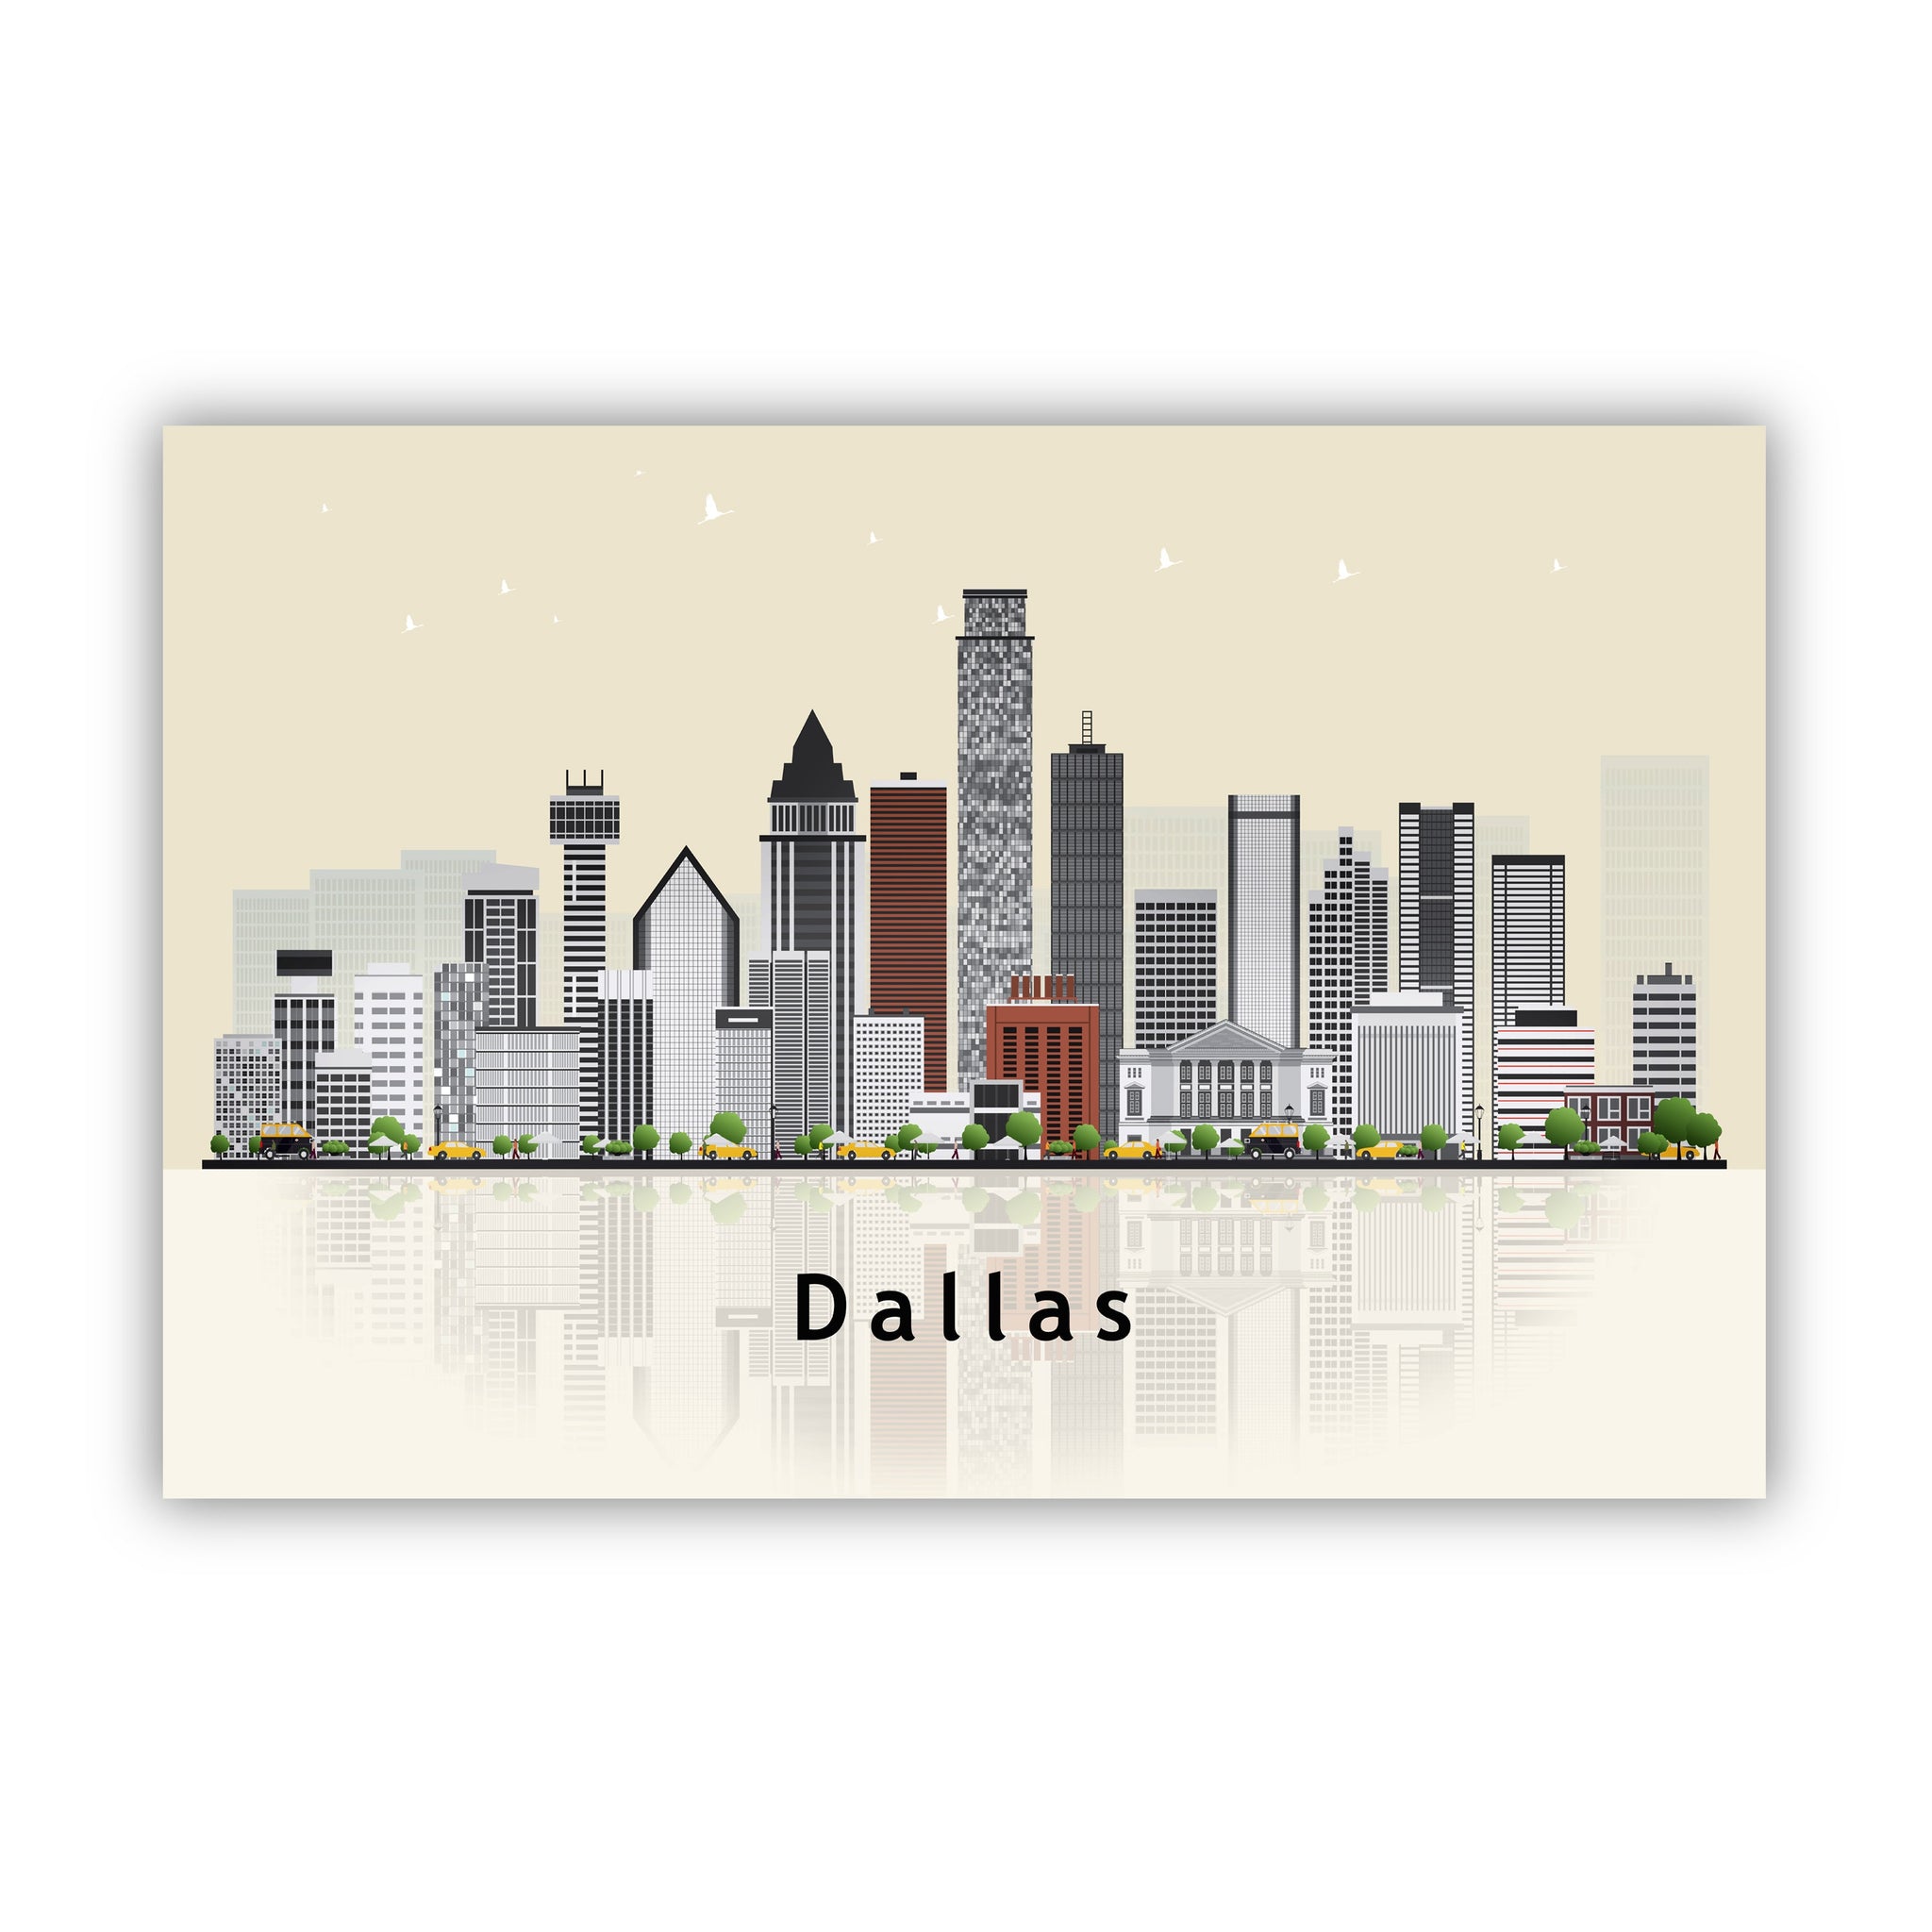 DALLAS TEXAS Illustration skyline poster, Texas state modern skyline cityscape poster, Landmark art print, Home decoration